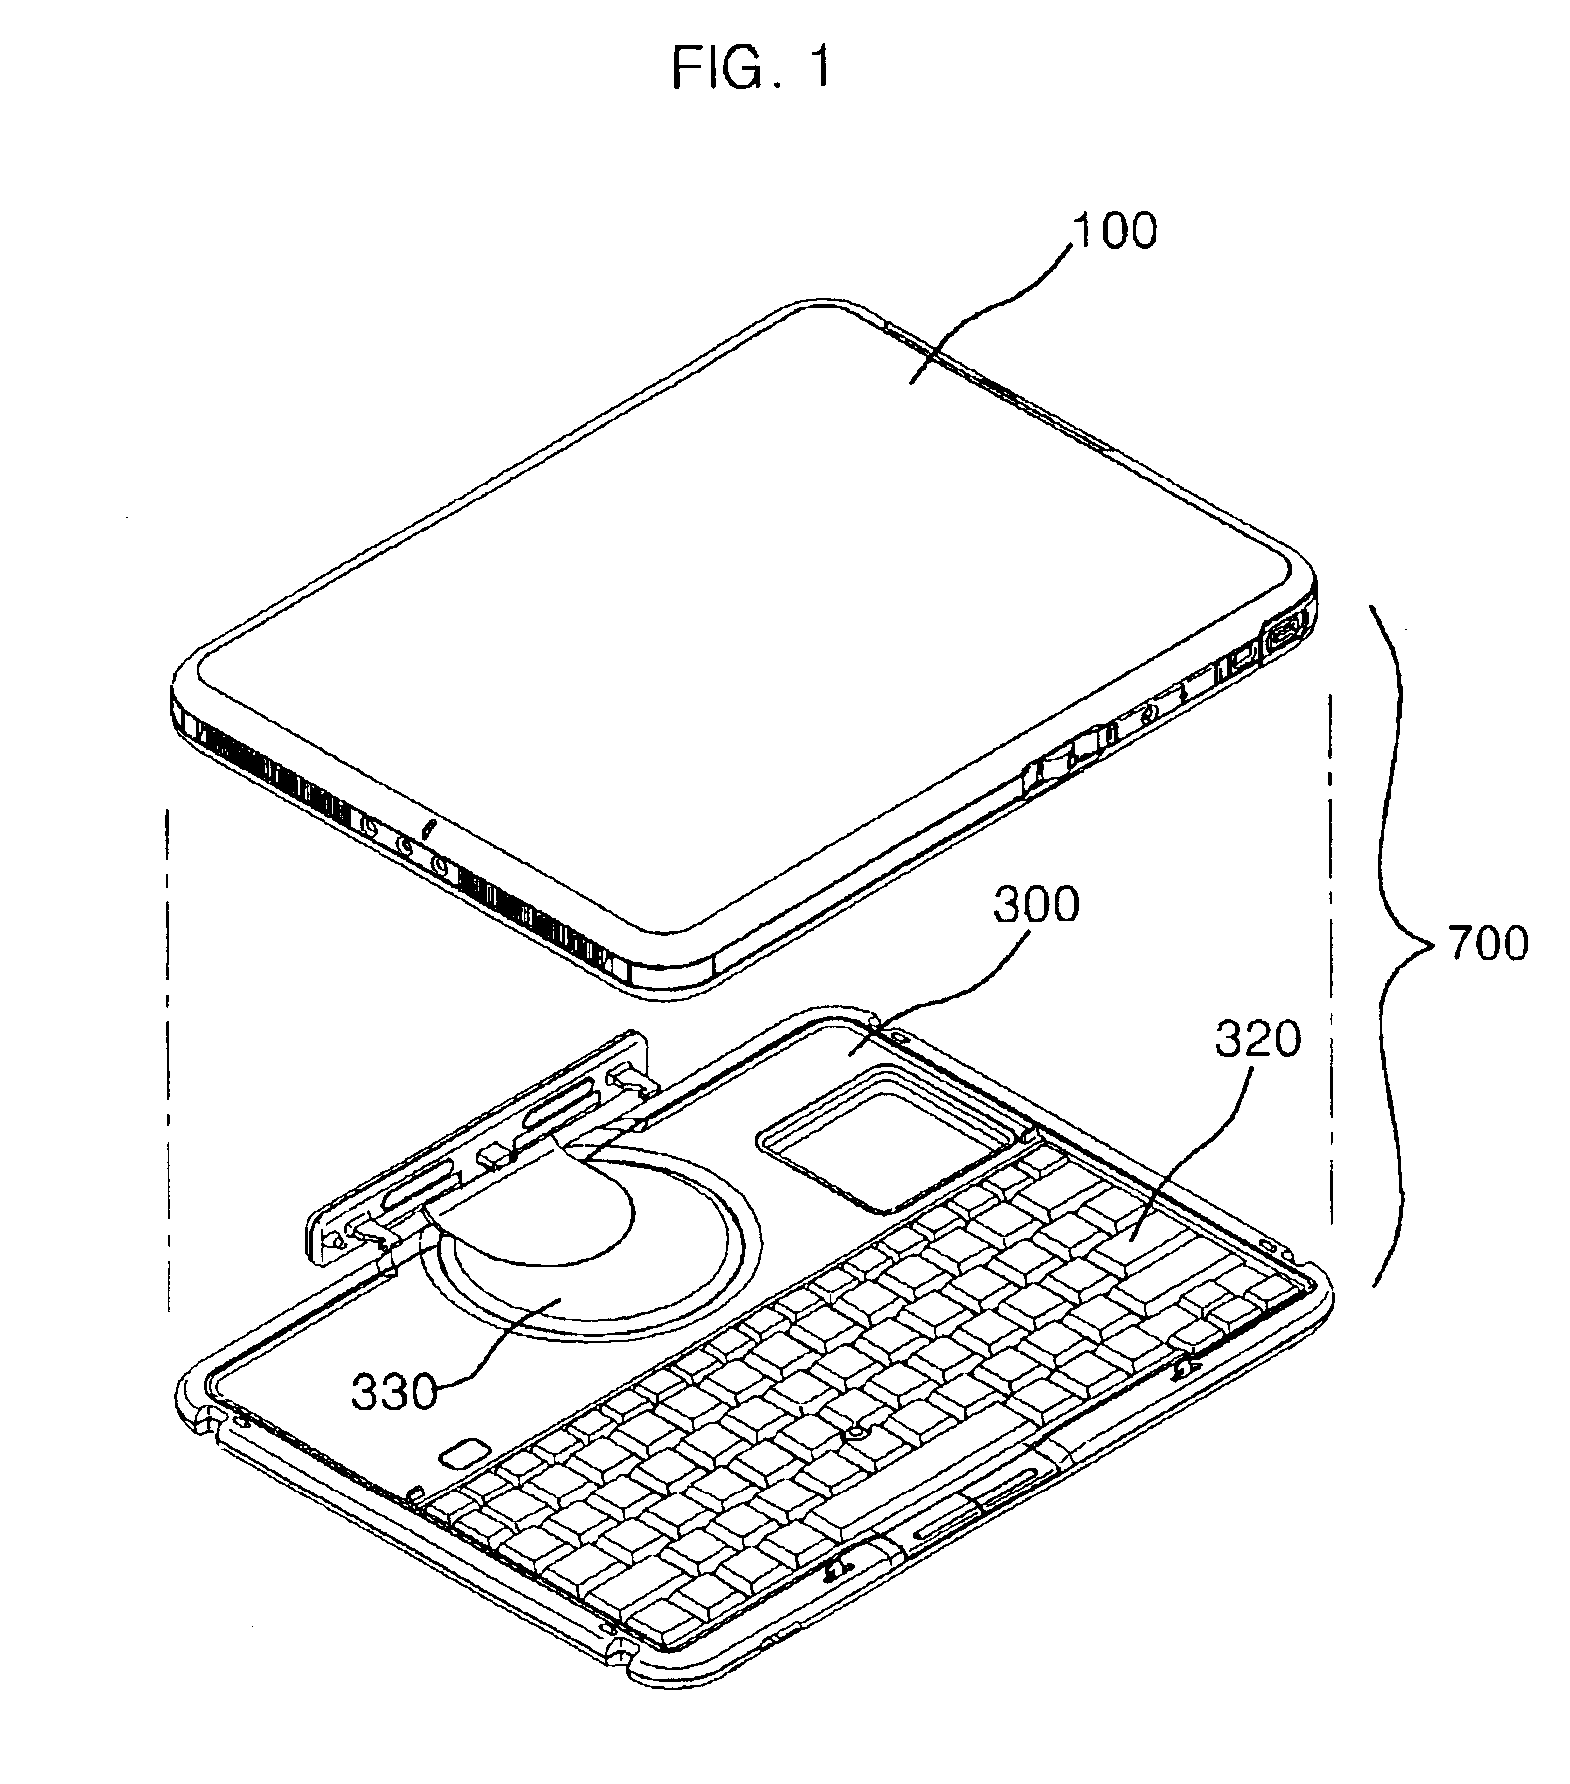 Portable computer and method